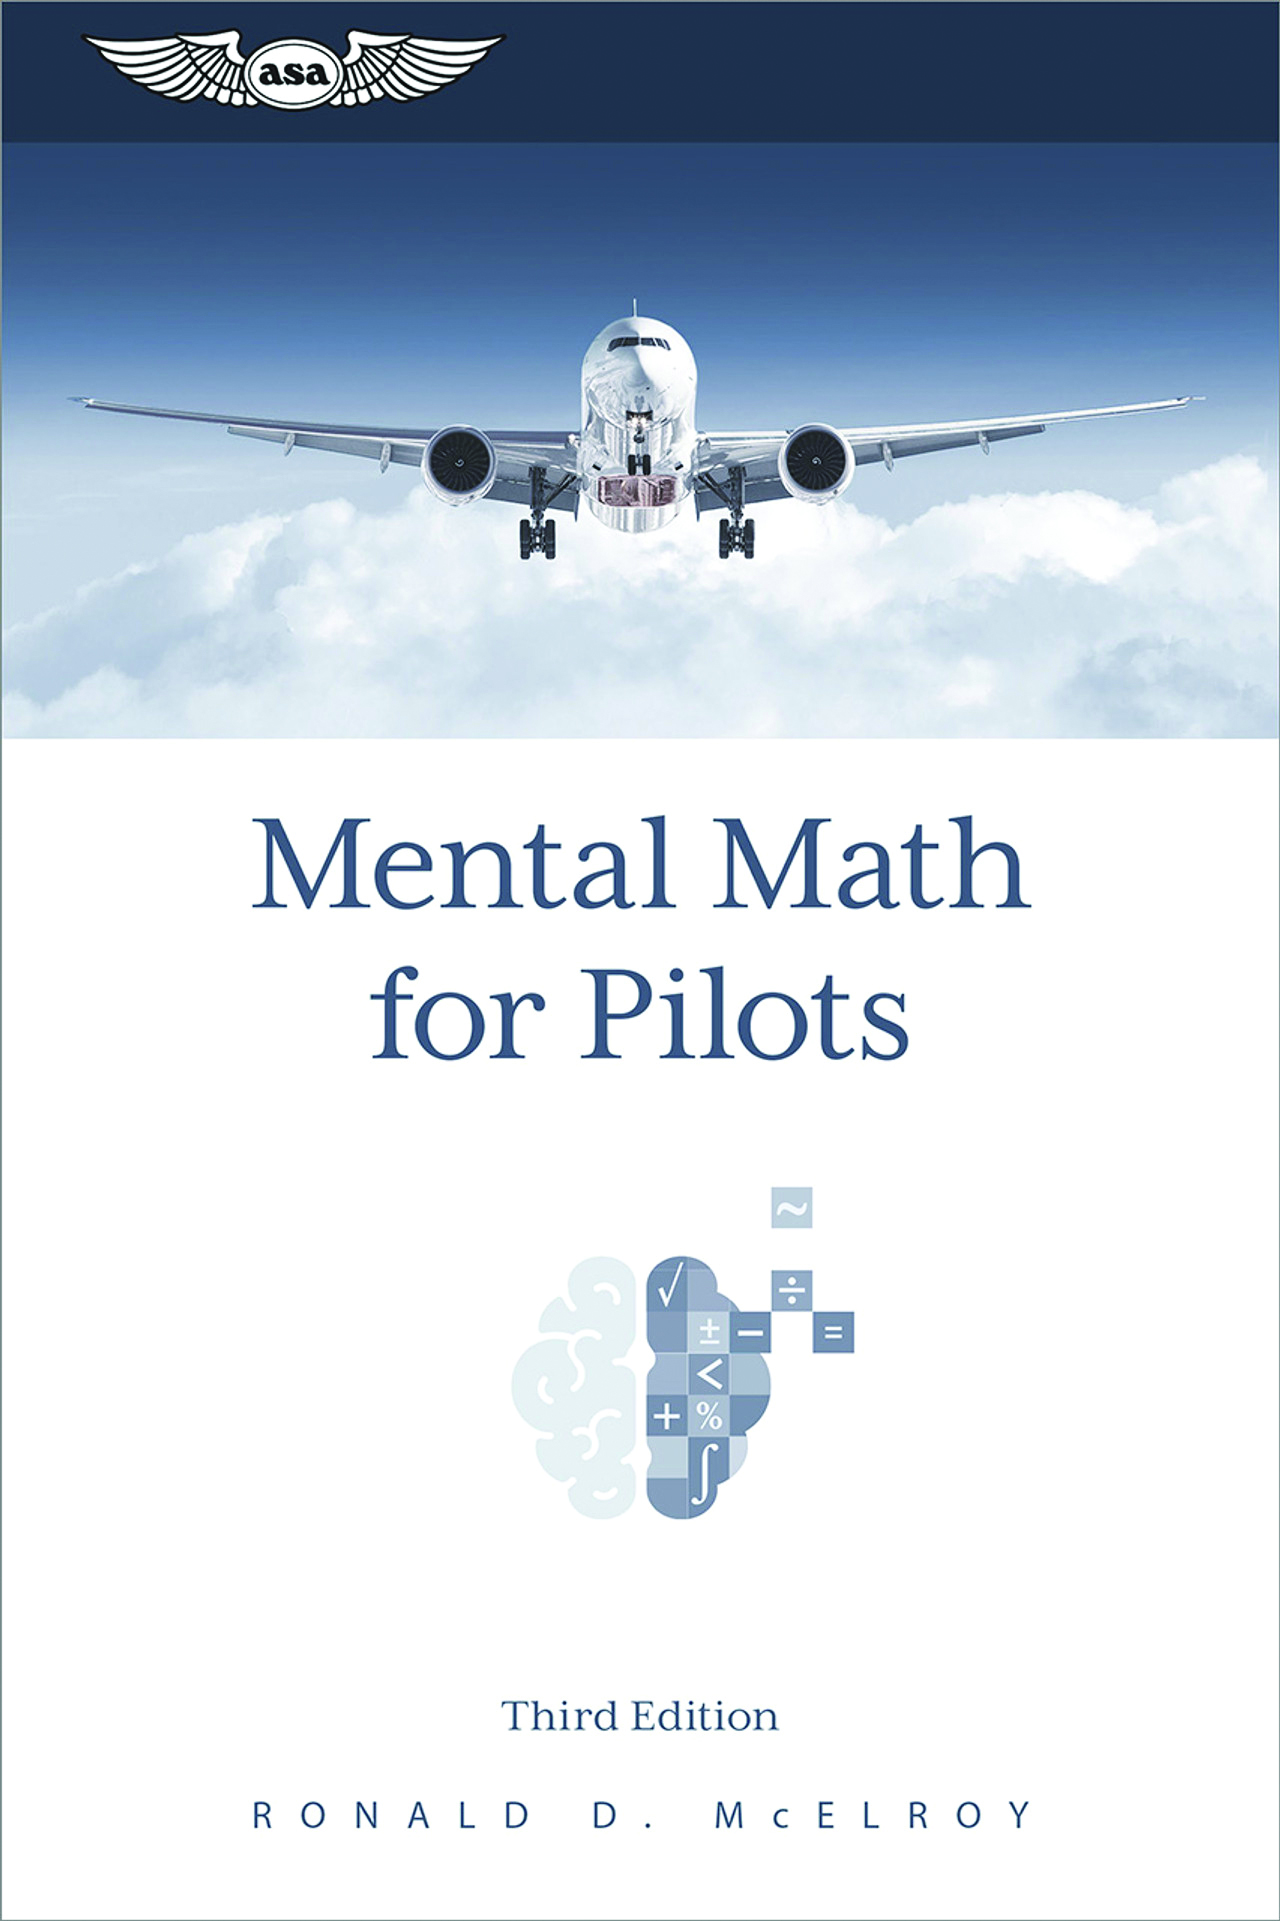 ASA Mental Math for Pilots - 2nd Edition 